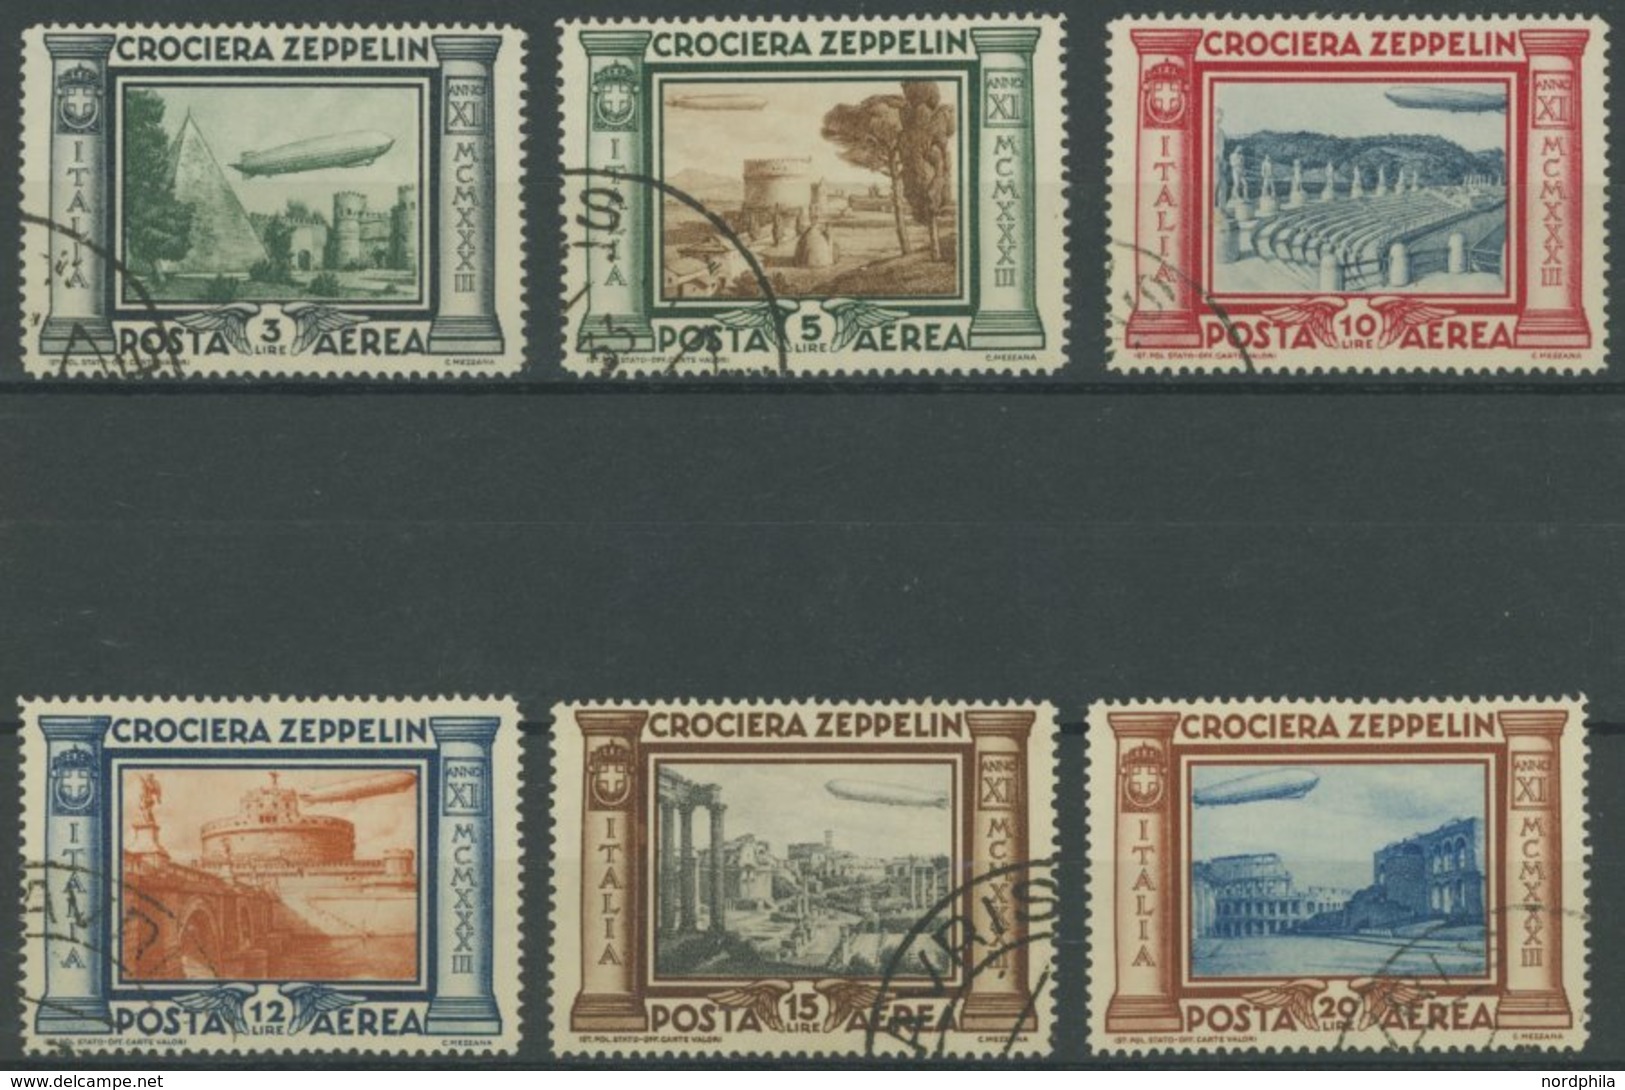 ITALIEN 439-44 O, 1933, Graf Zeppelin, Eckstempel, Prachtsatz - Used